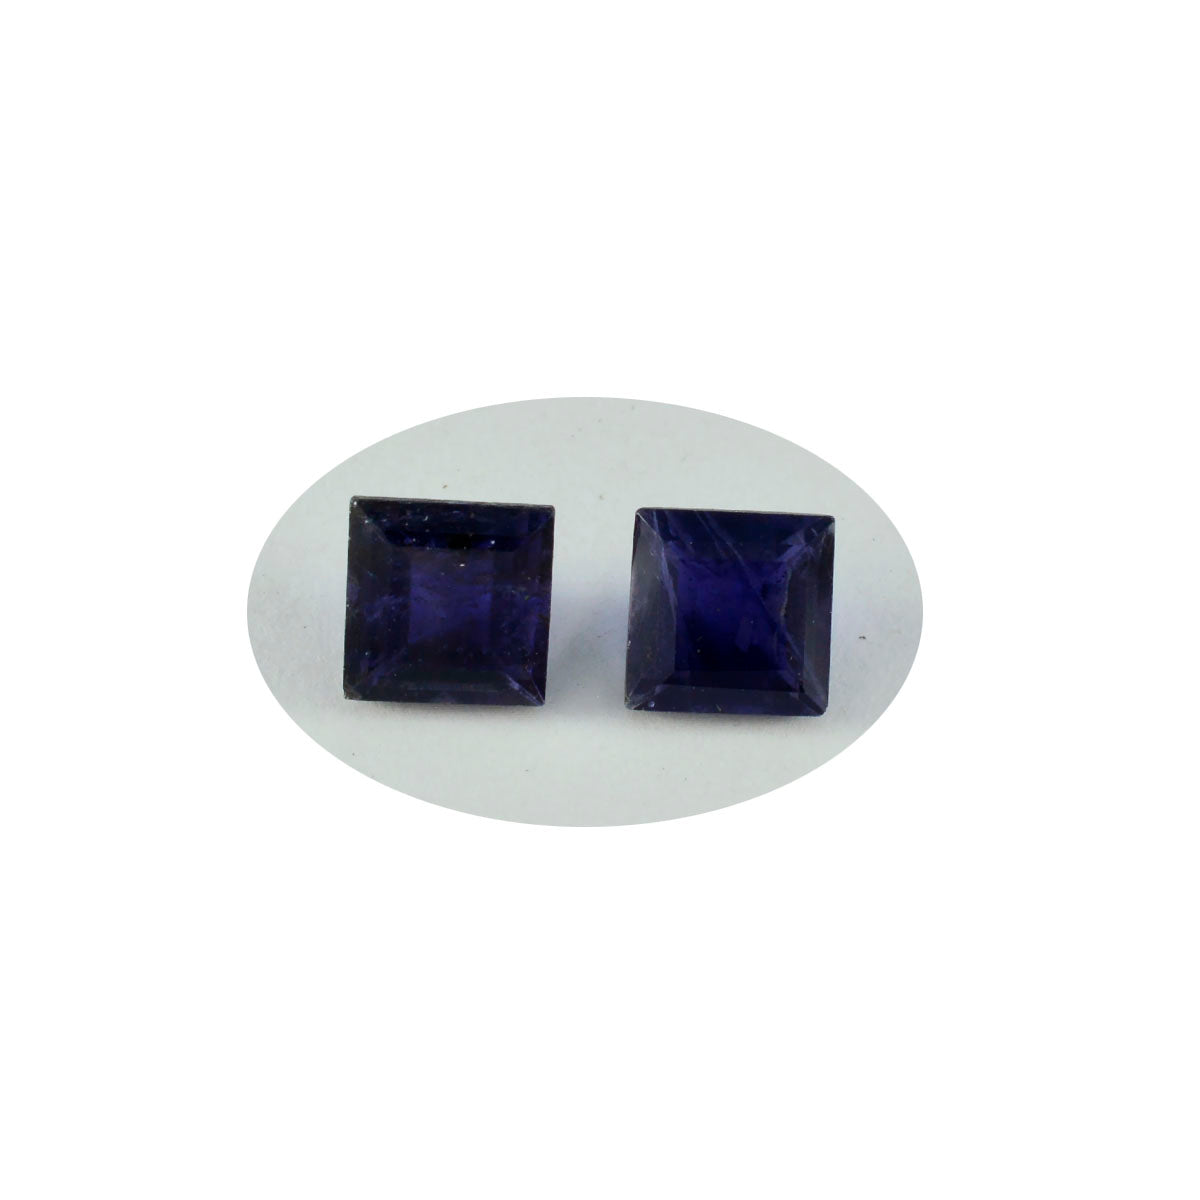 Riyogems 1PC Blue Iolite Faceted 12x12 mm Square Shape beautiful Quality Gem